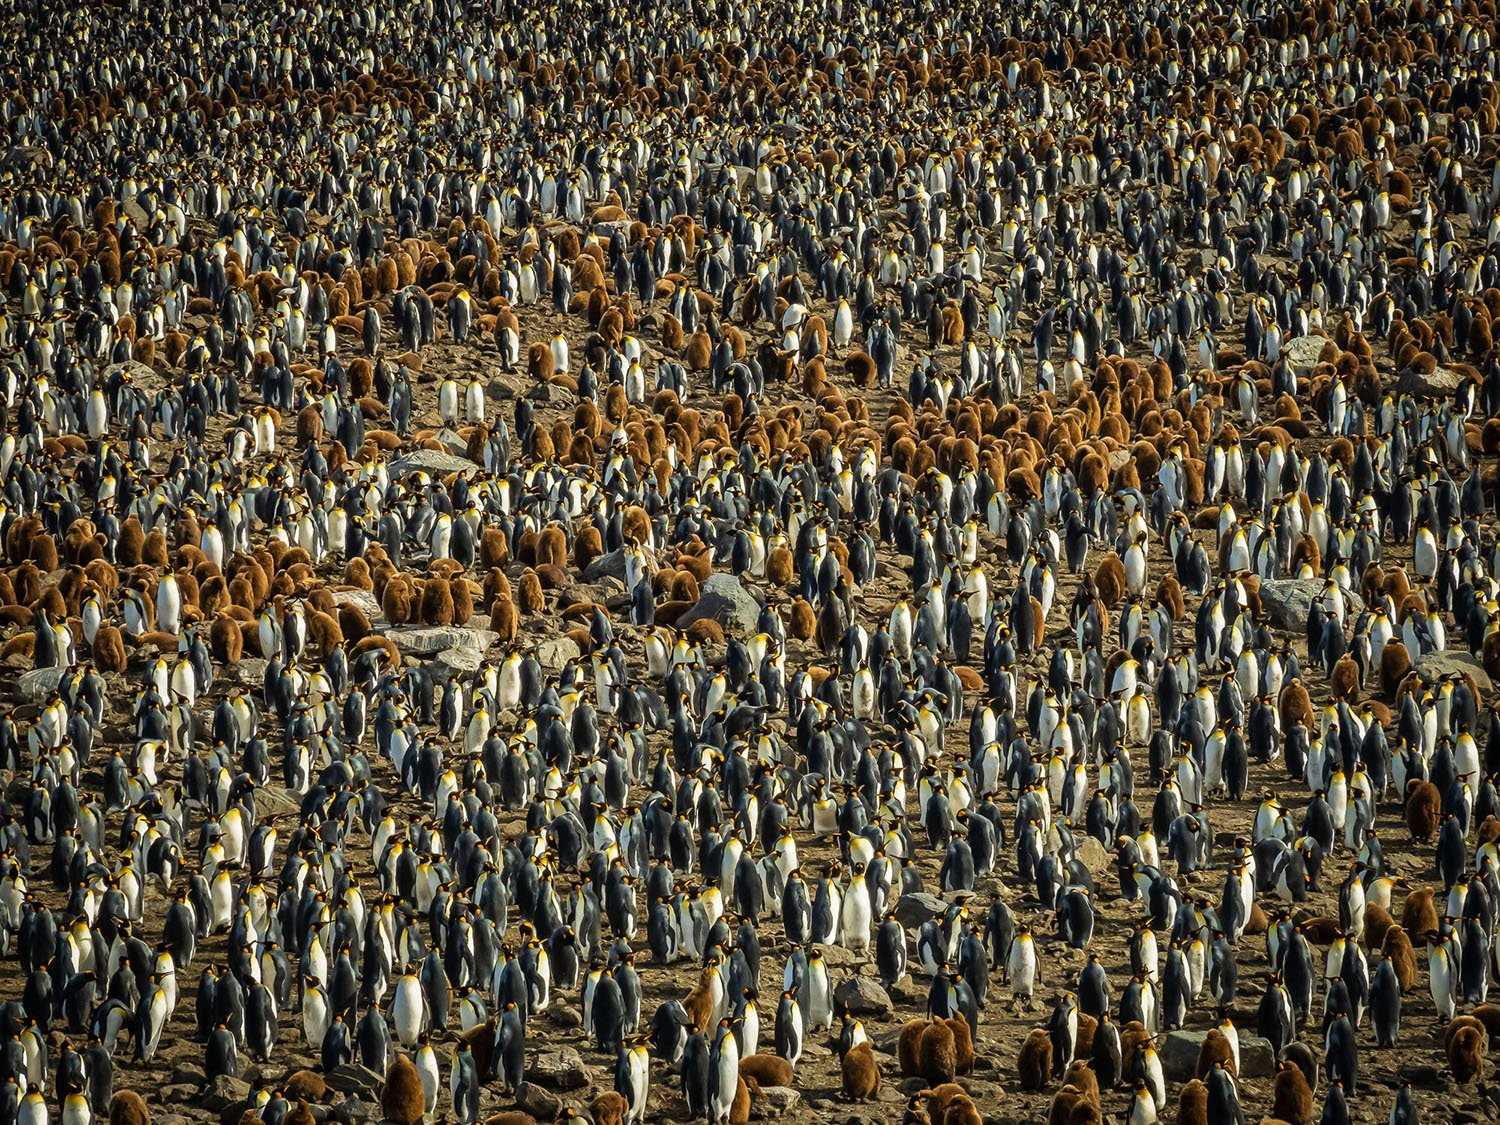 thousands of penguins